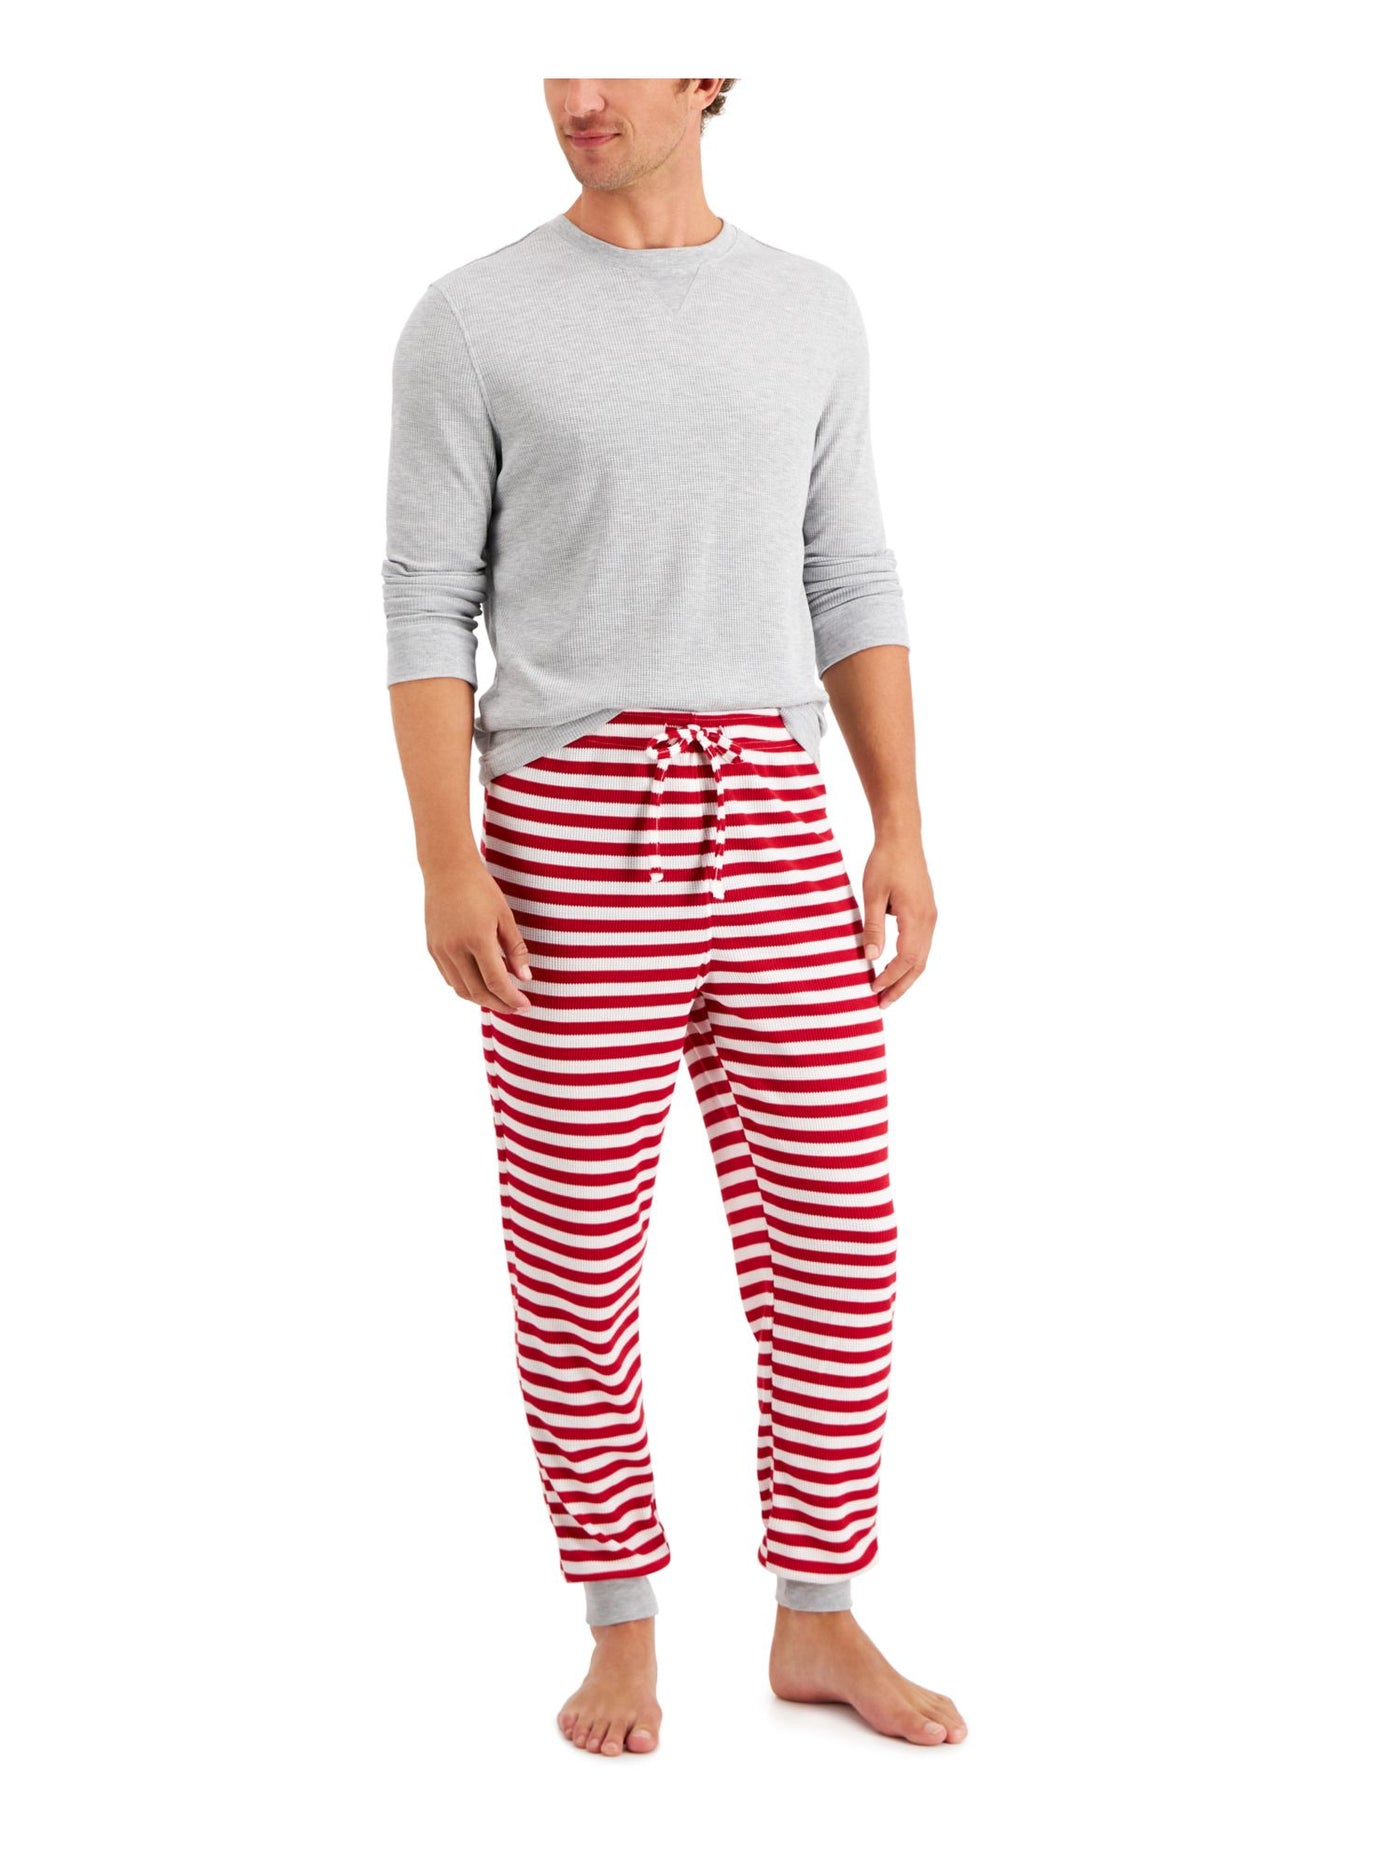 FAMILY PJs Mens Red Top Elastic Band Long Sleeve Lounge Pants Thermal Pajamas S